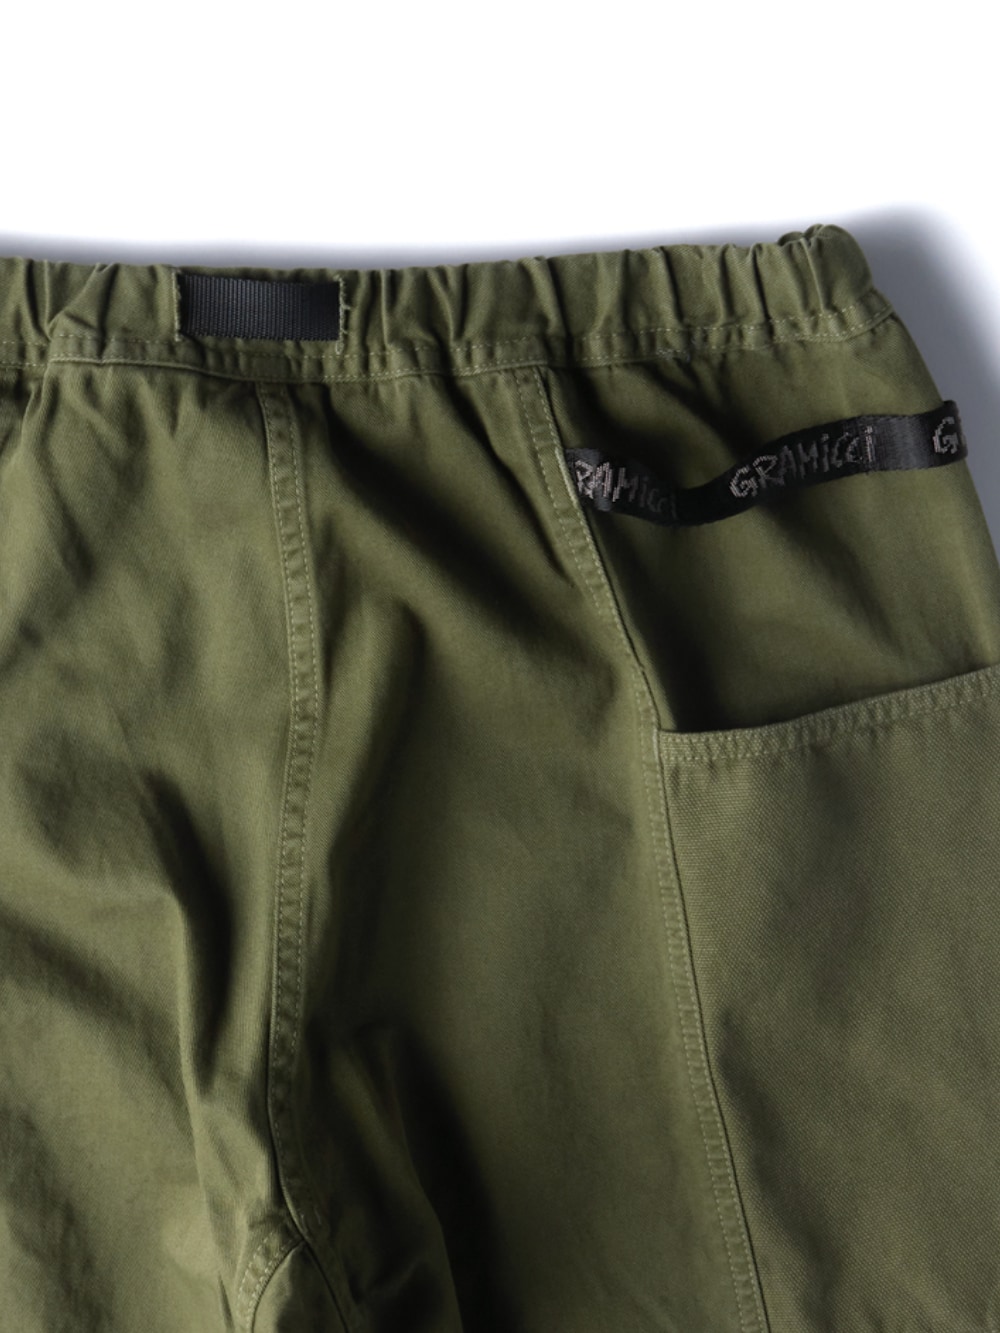 Gramicci: Gadget Pants - Olive | Gotengo Menswear